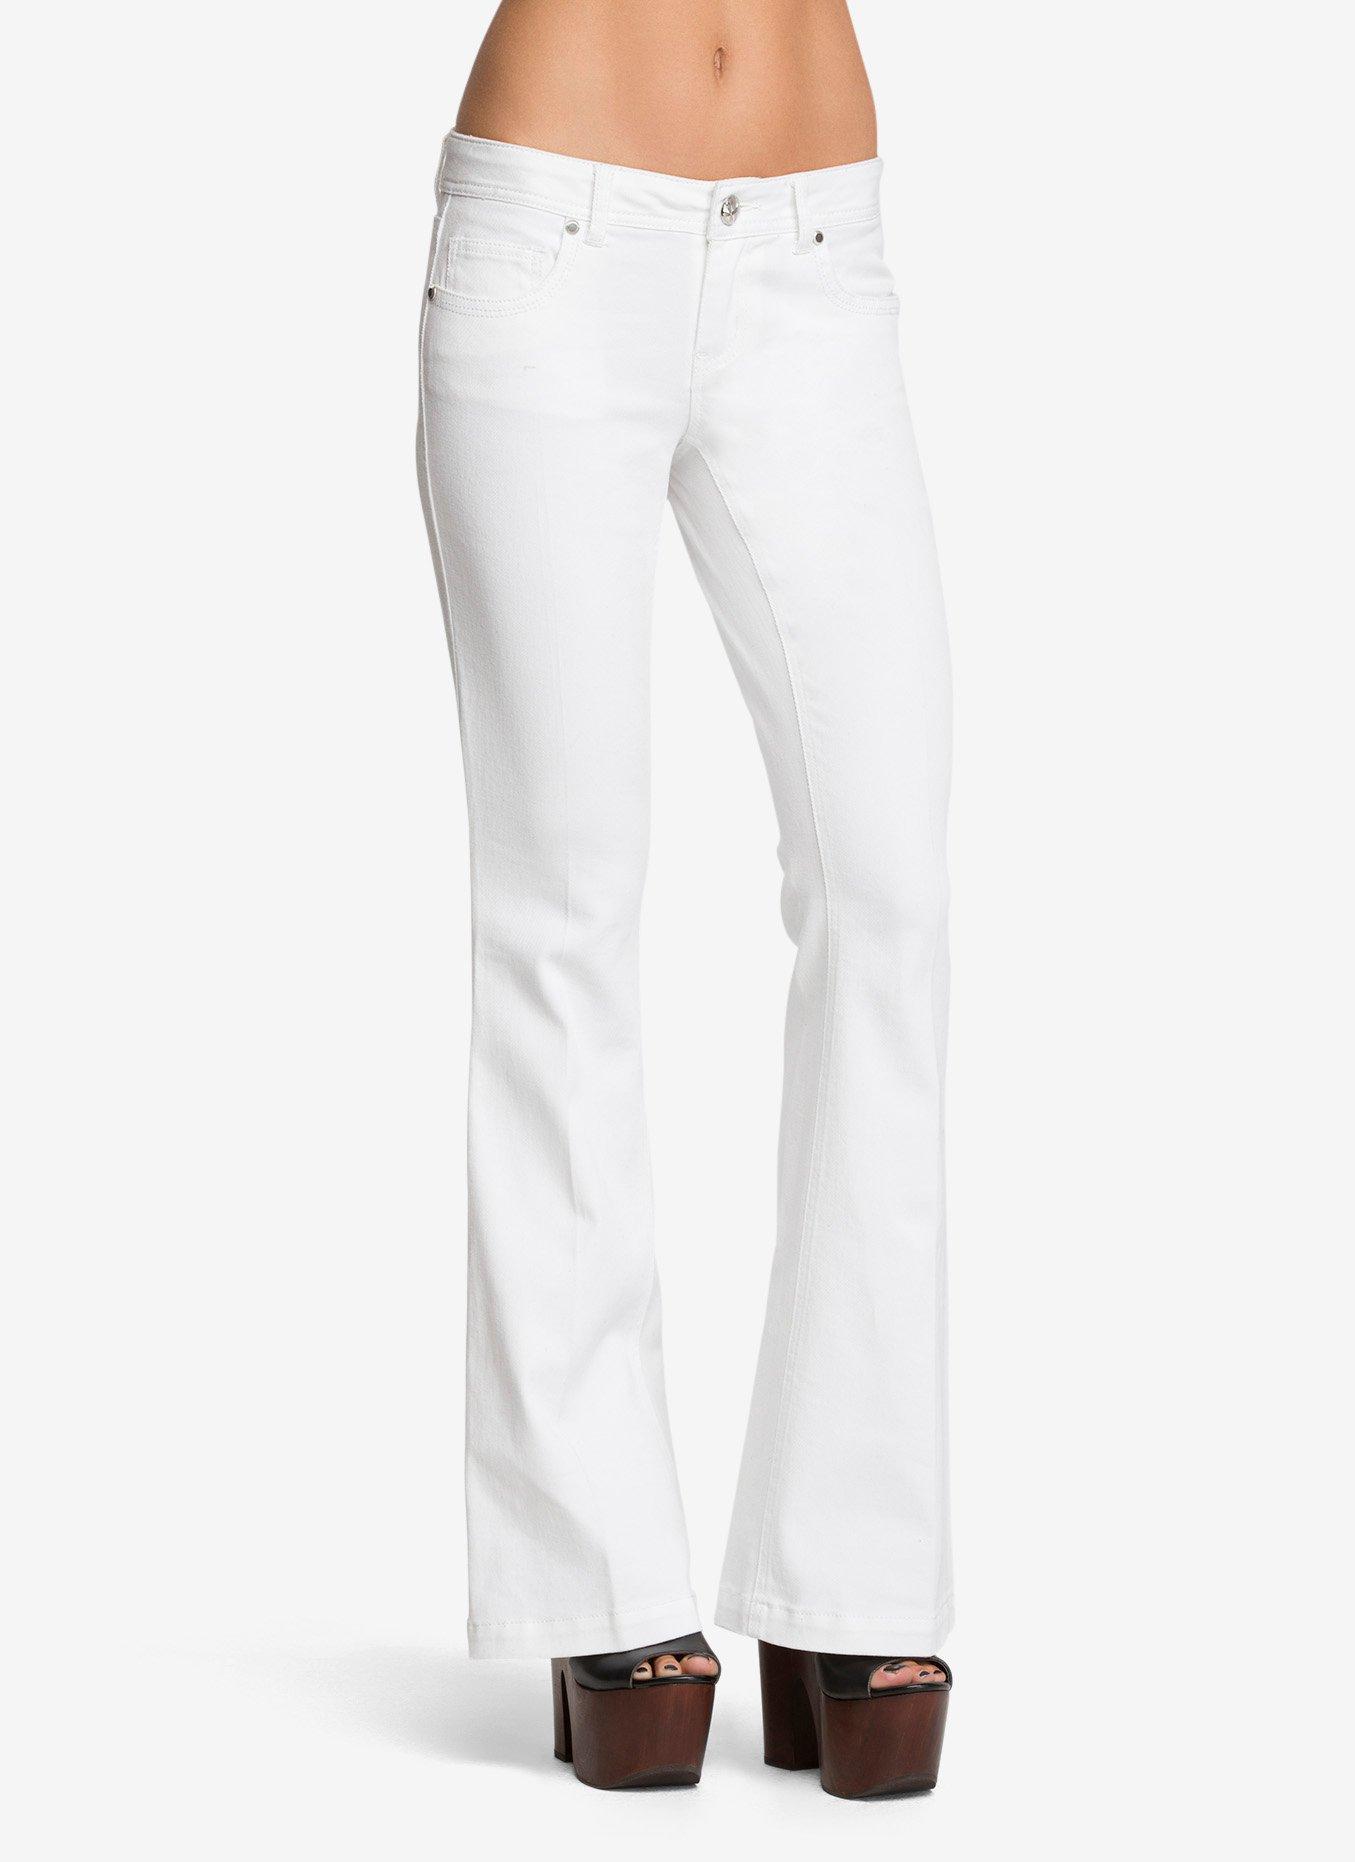 White Flared Jeans, WHITE, hi-res